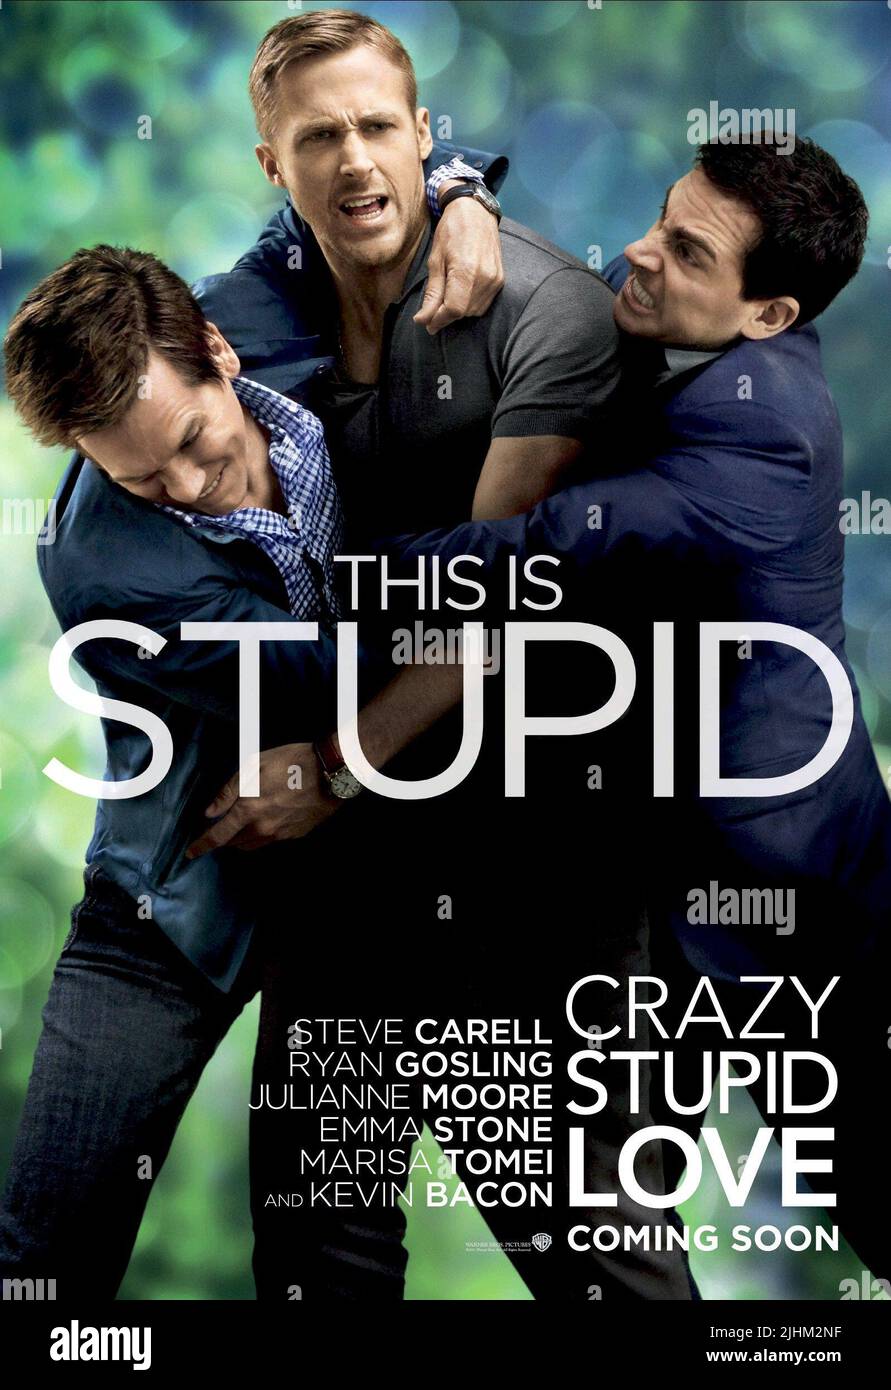 KEVIN BACON, Ryan Gosling, Steve Carell, l'AFFICHE DE CRAZY STUPID LOVE, 2011. Banque D'Images